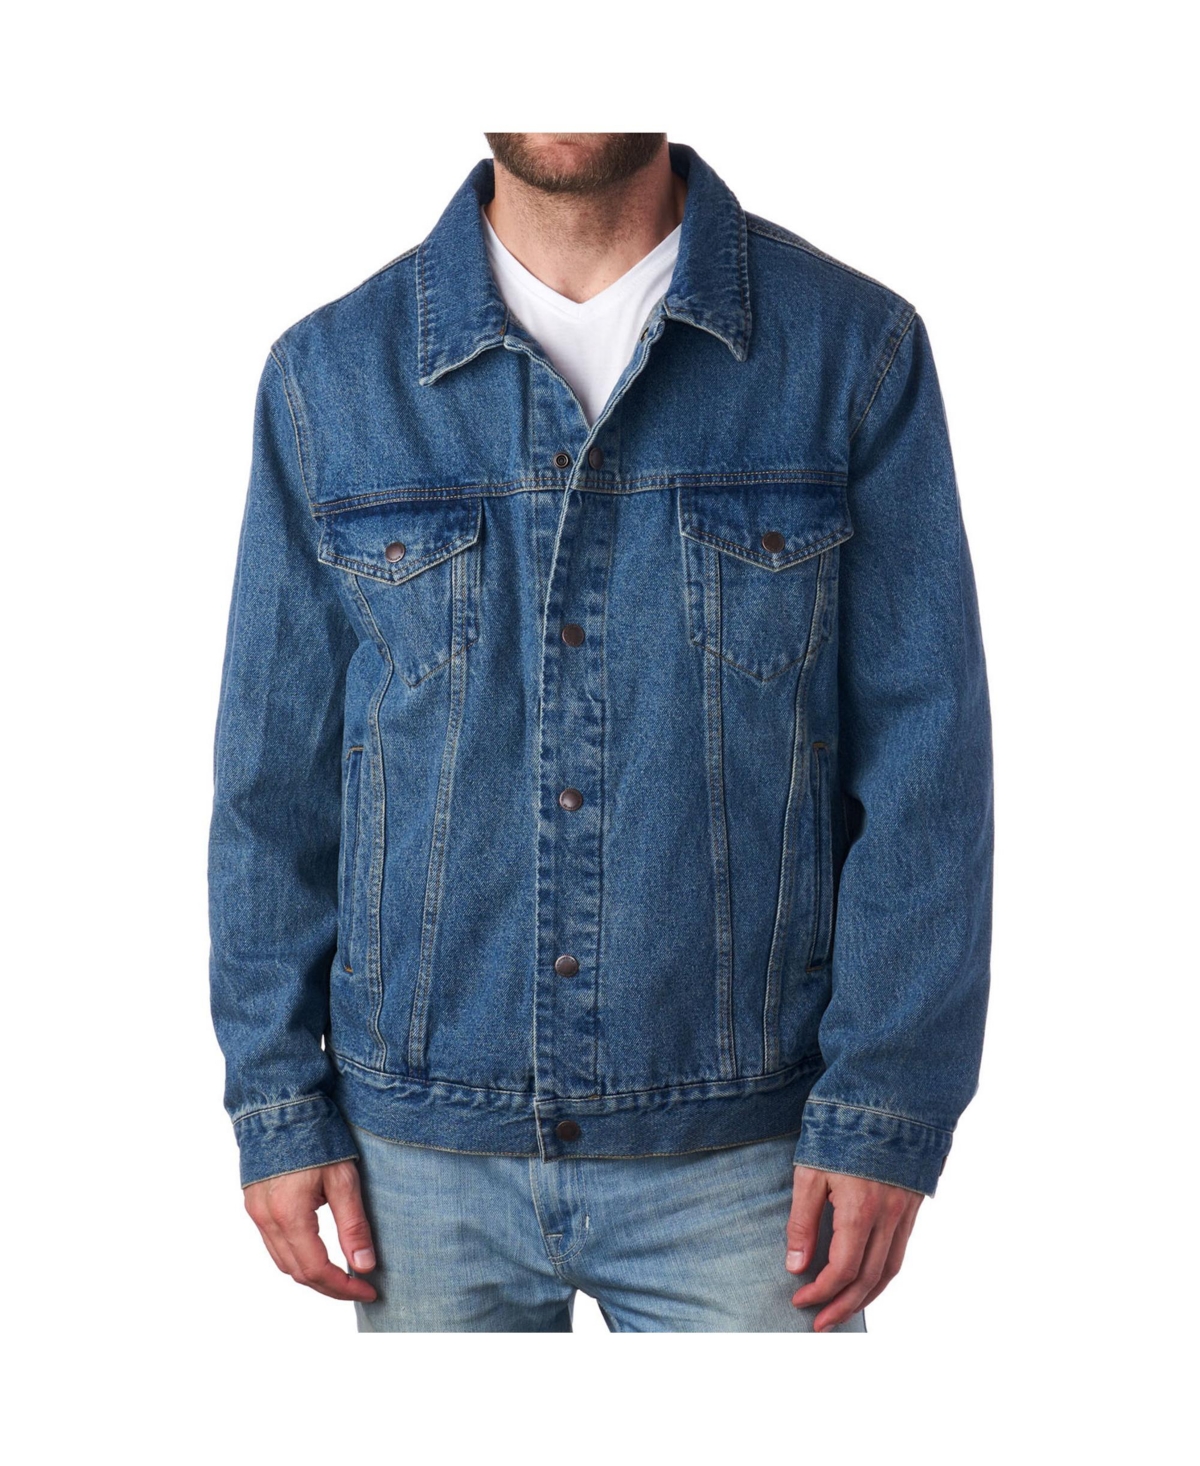 Derek Mens Classic Denim Jacket Casual Button Up Jean Trucker Coat - Denim